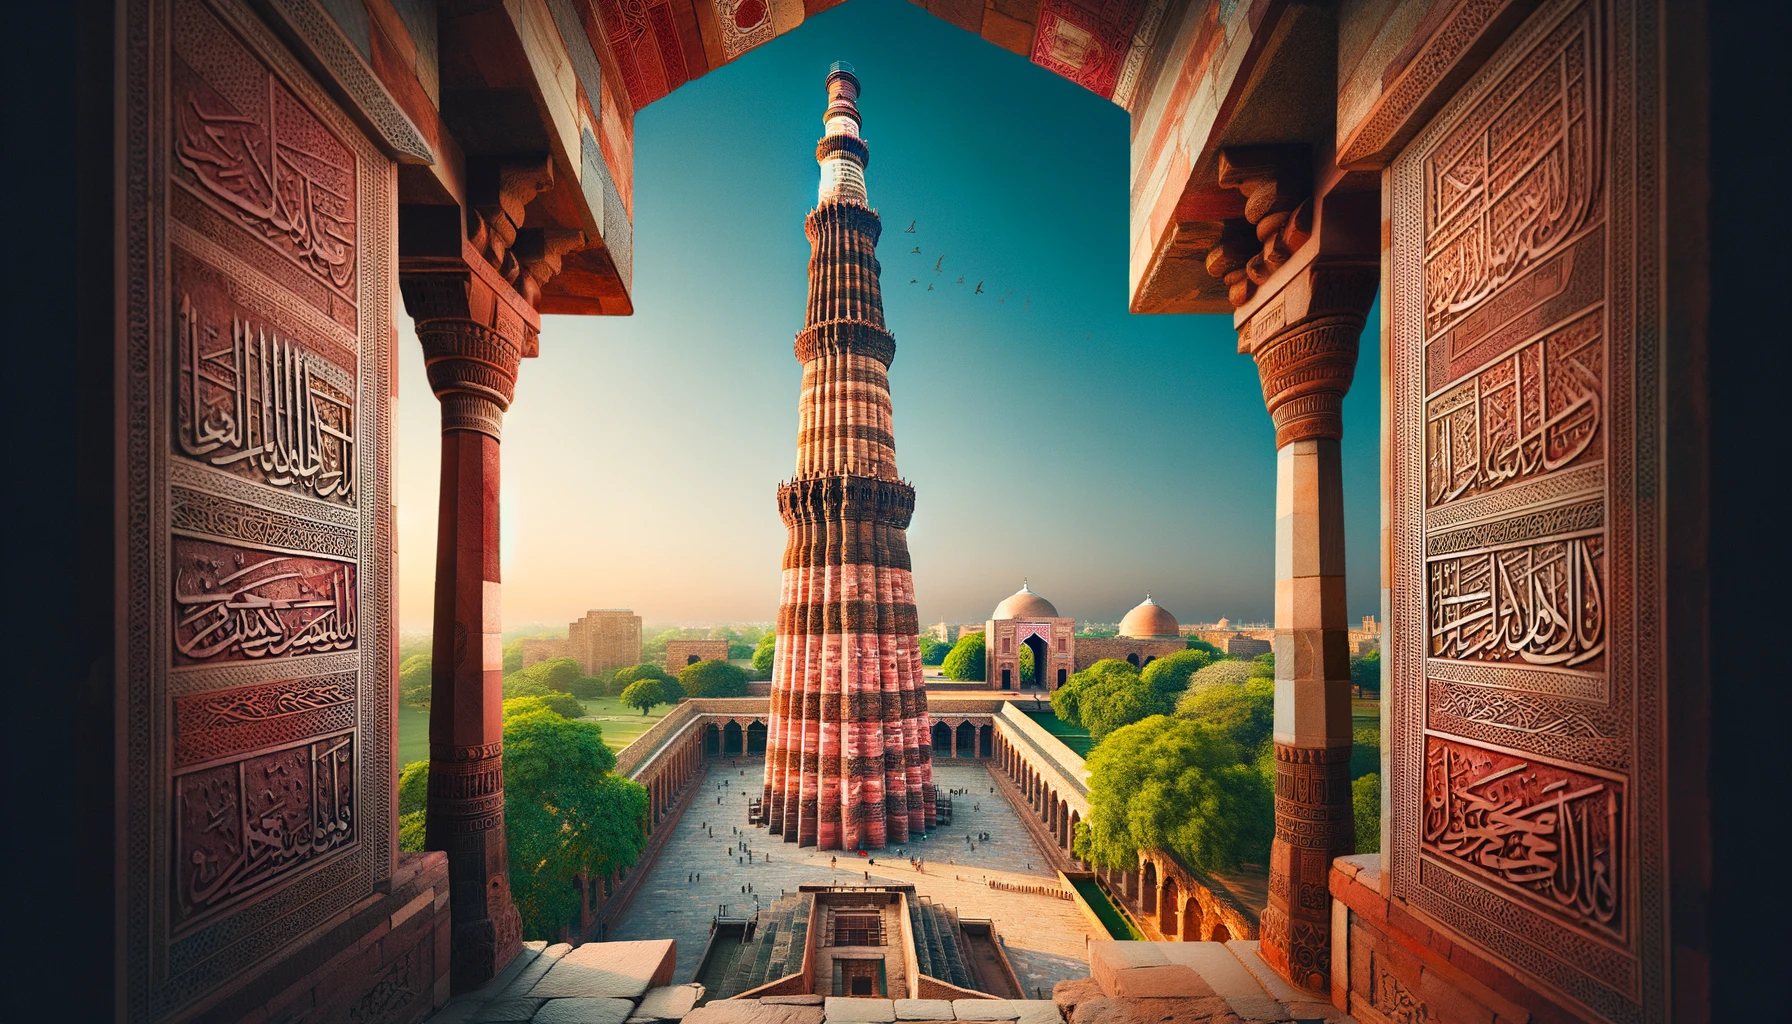 How to Visit Qutub Minar